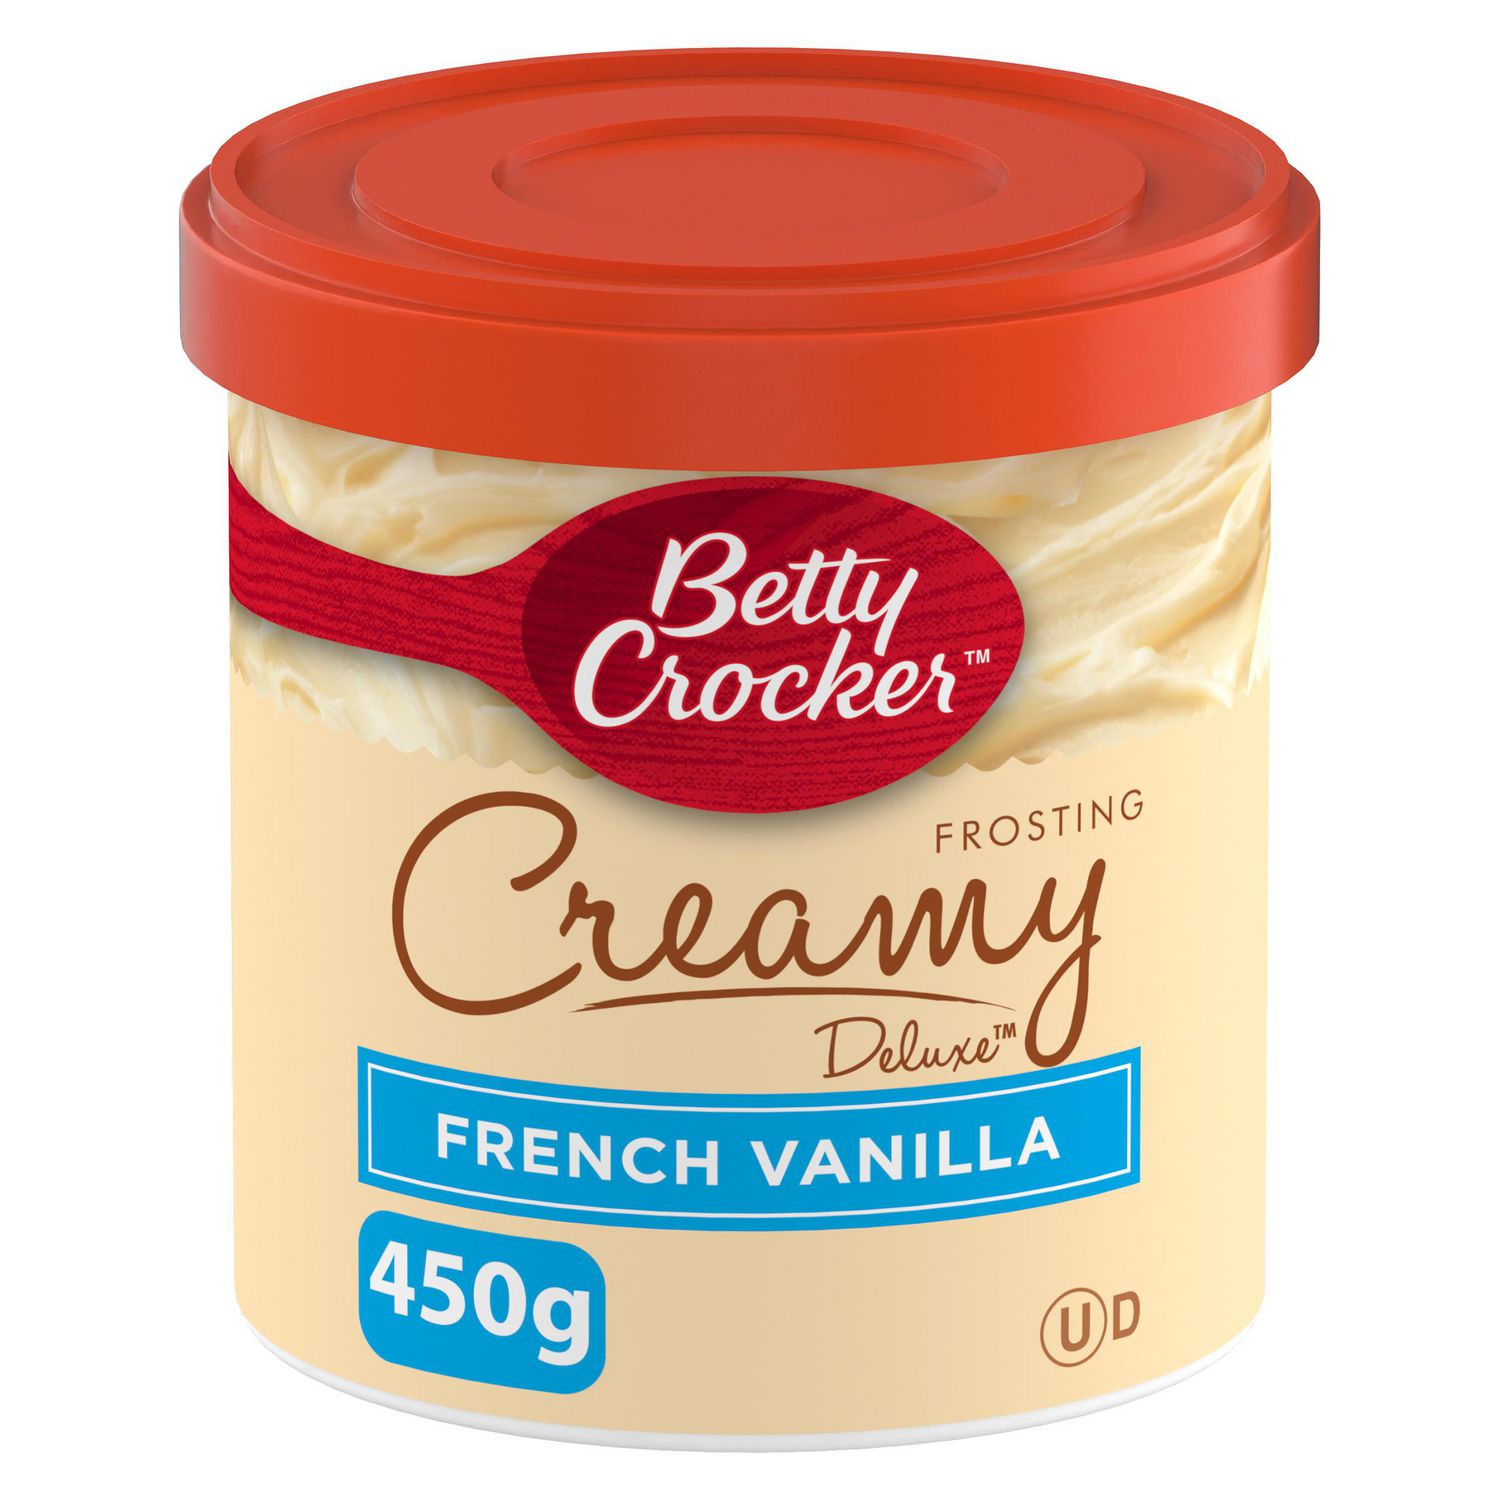 French vanilla. Betty Crocker Frosting. Betty Crocker данс. Фростинг ванильный пудов.